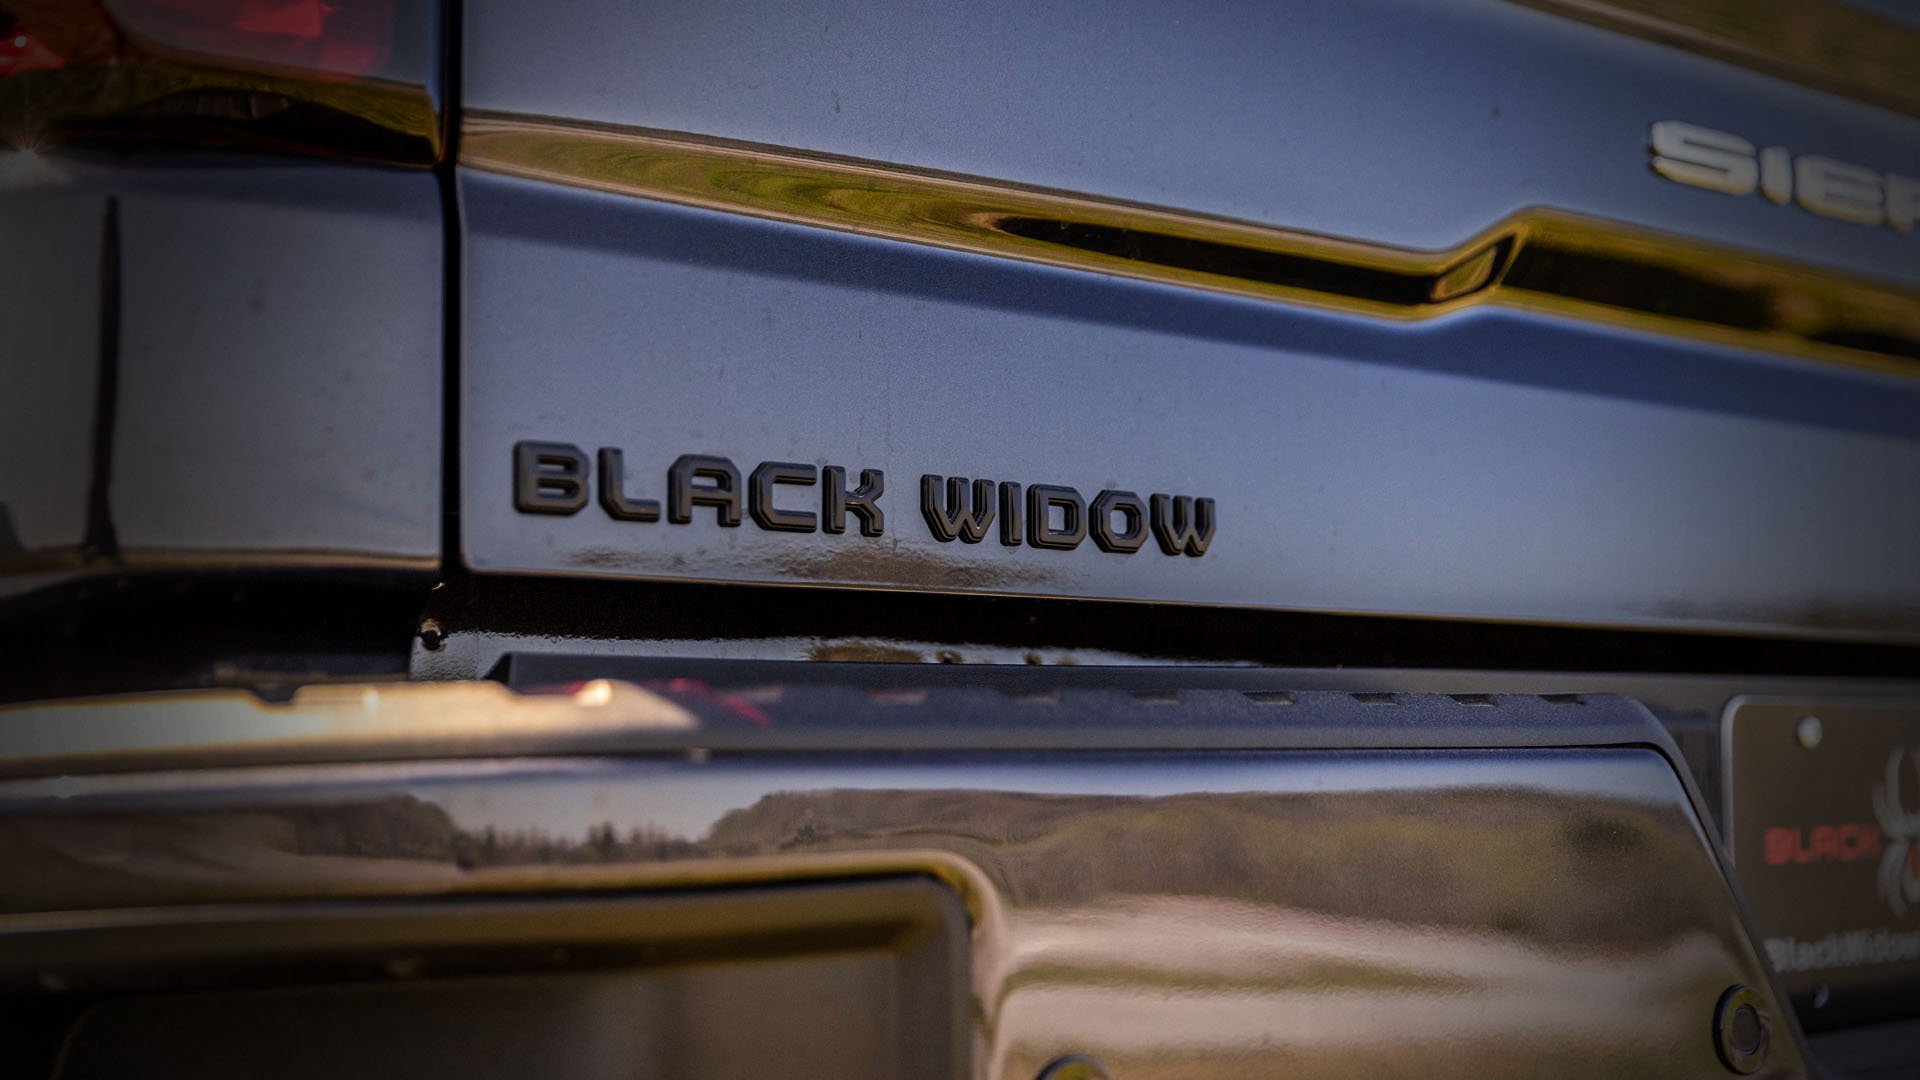 Black Widow tailgate badge